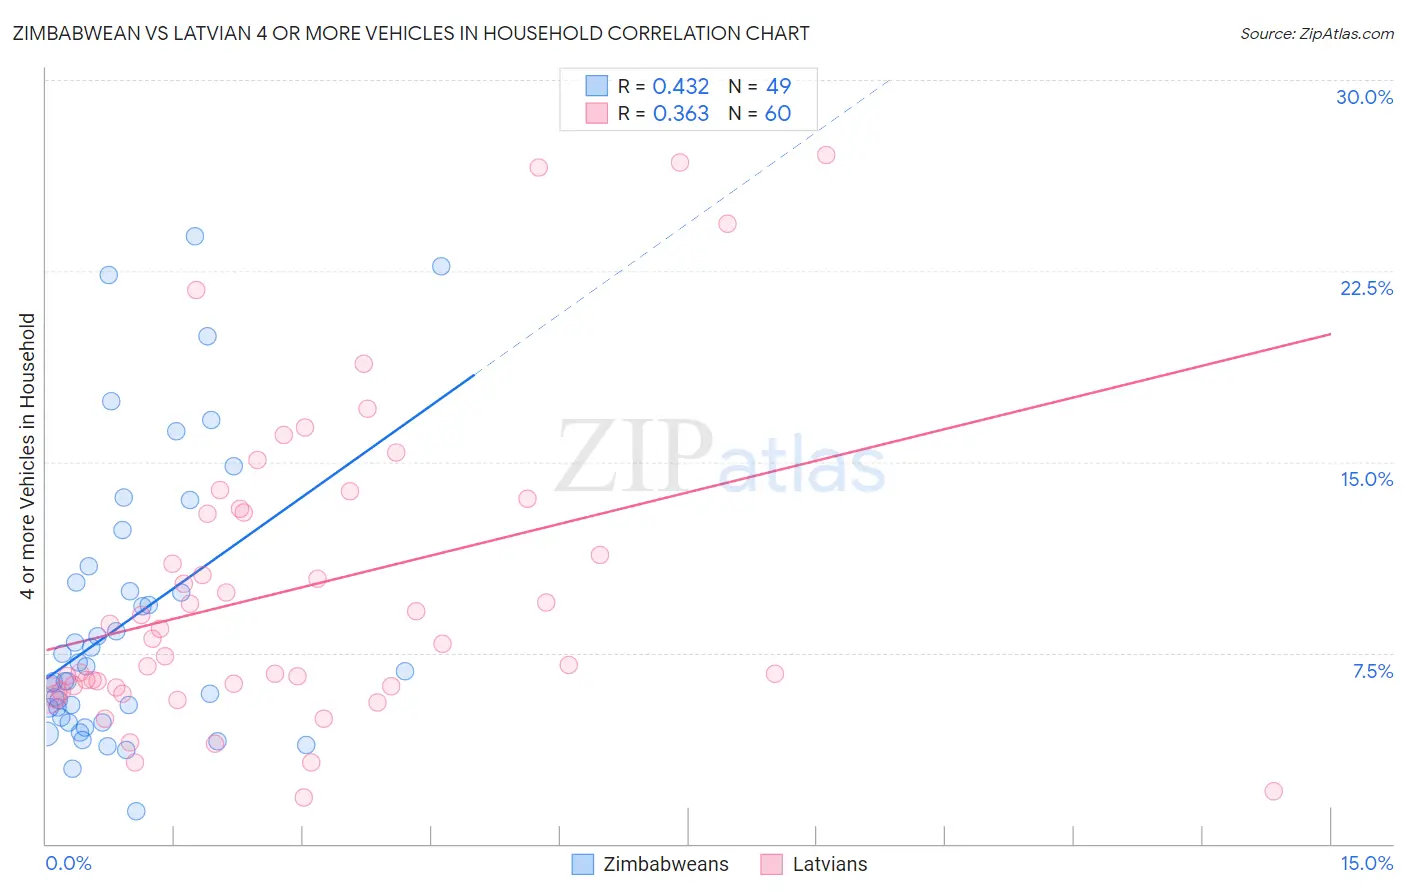 Zimbabwean vs Latvian 4 or more Vehicles in Household